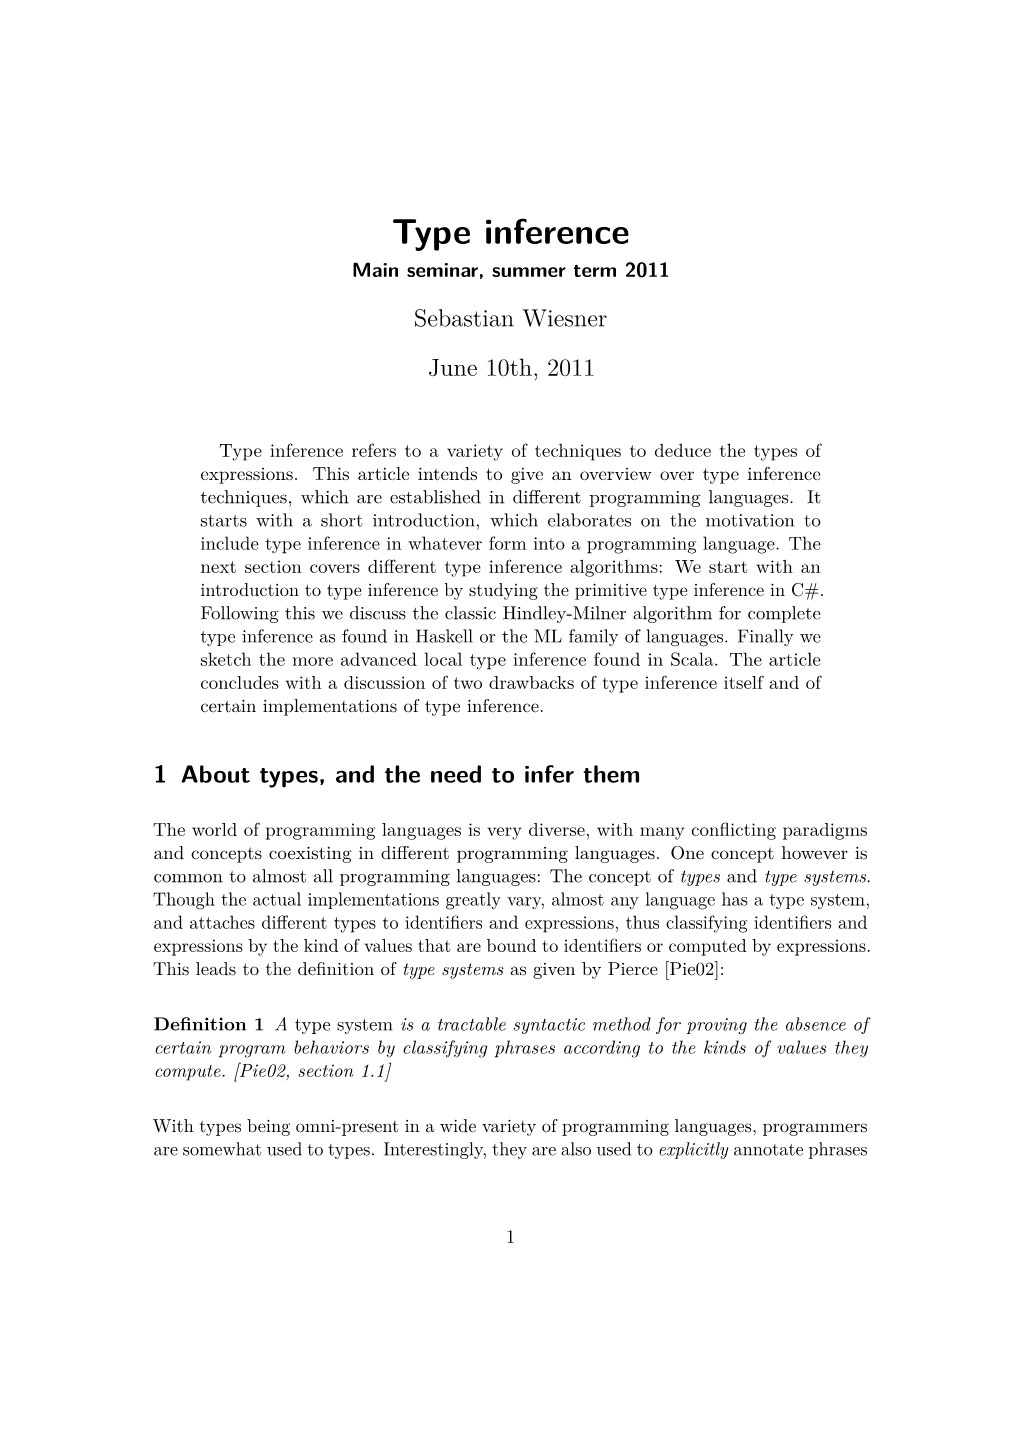 Type Inference Main Seminar, Summer Term 2011